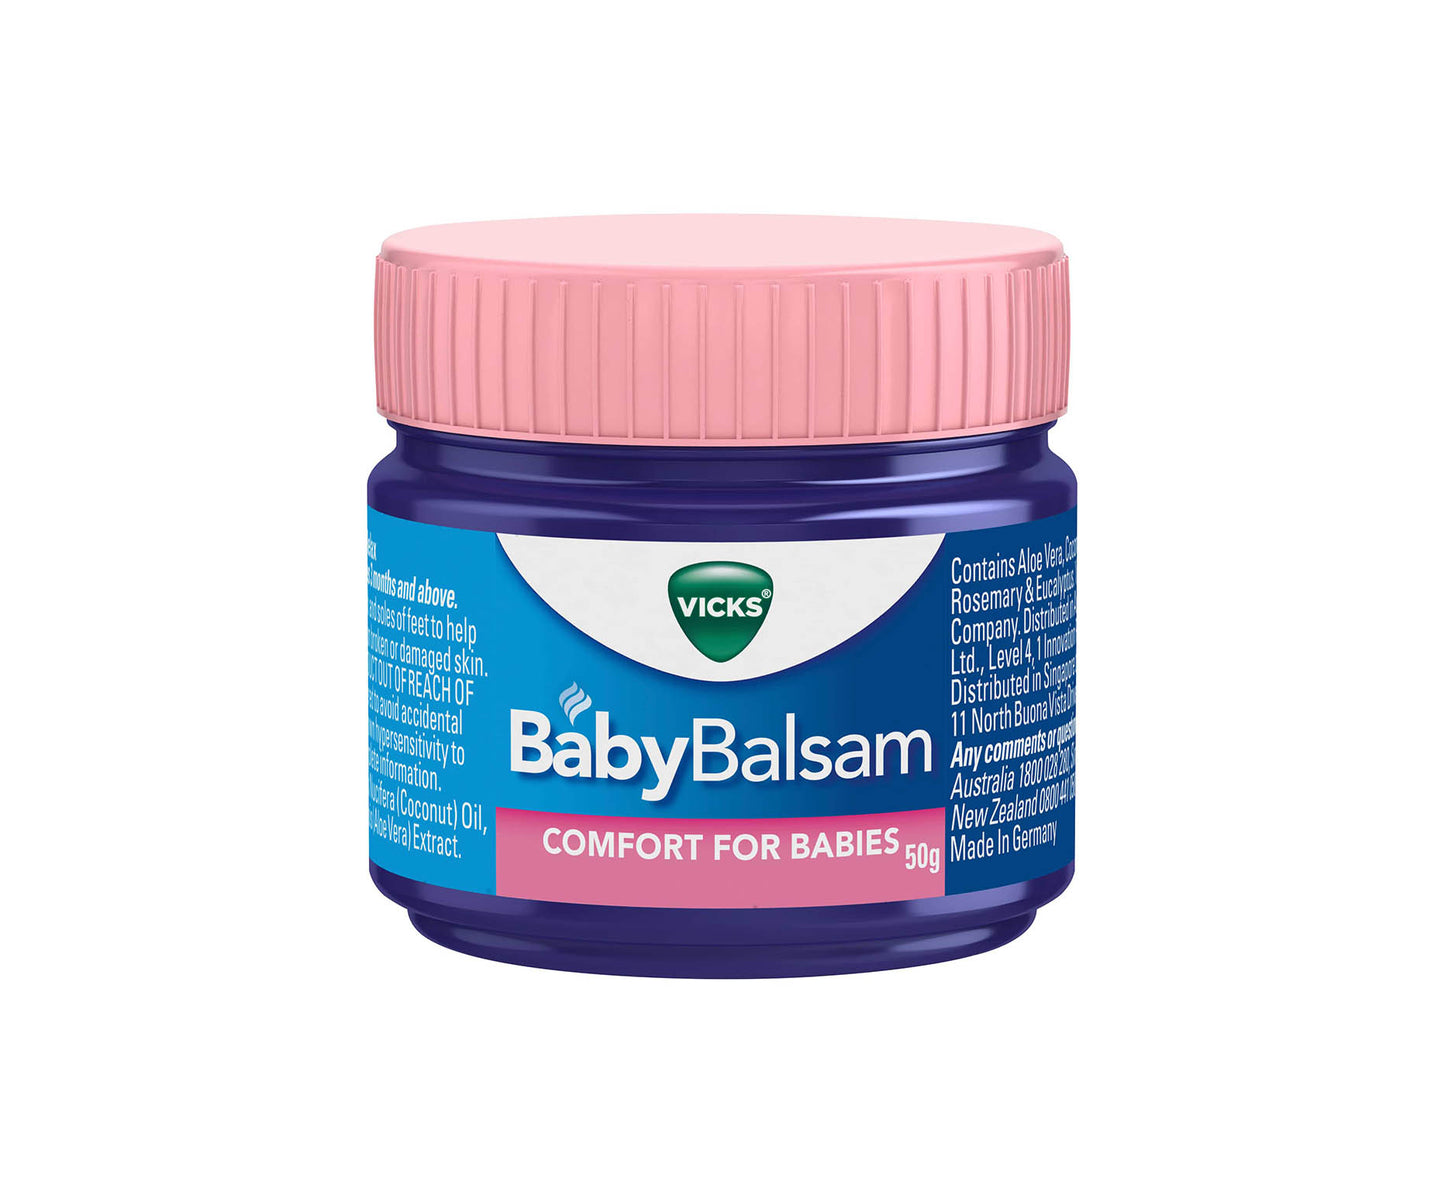 Vicks Baby Balsam Decongestant Rub 50g